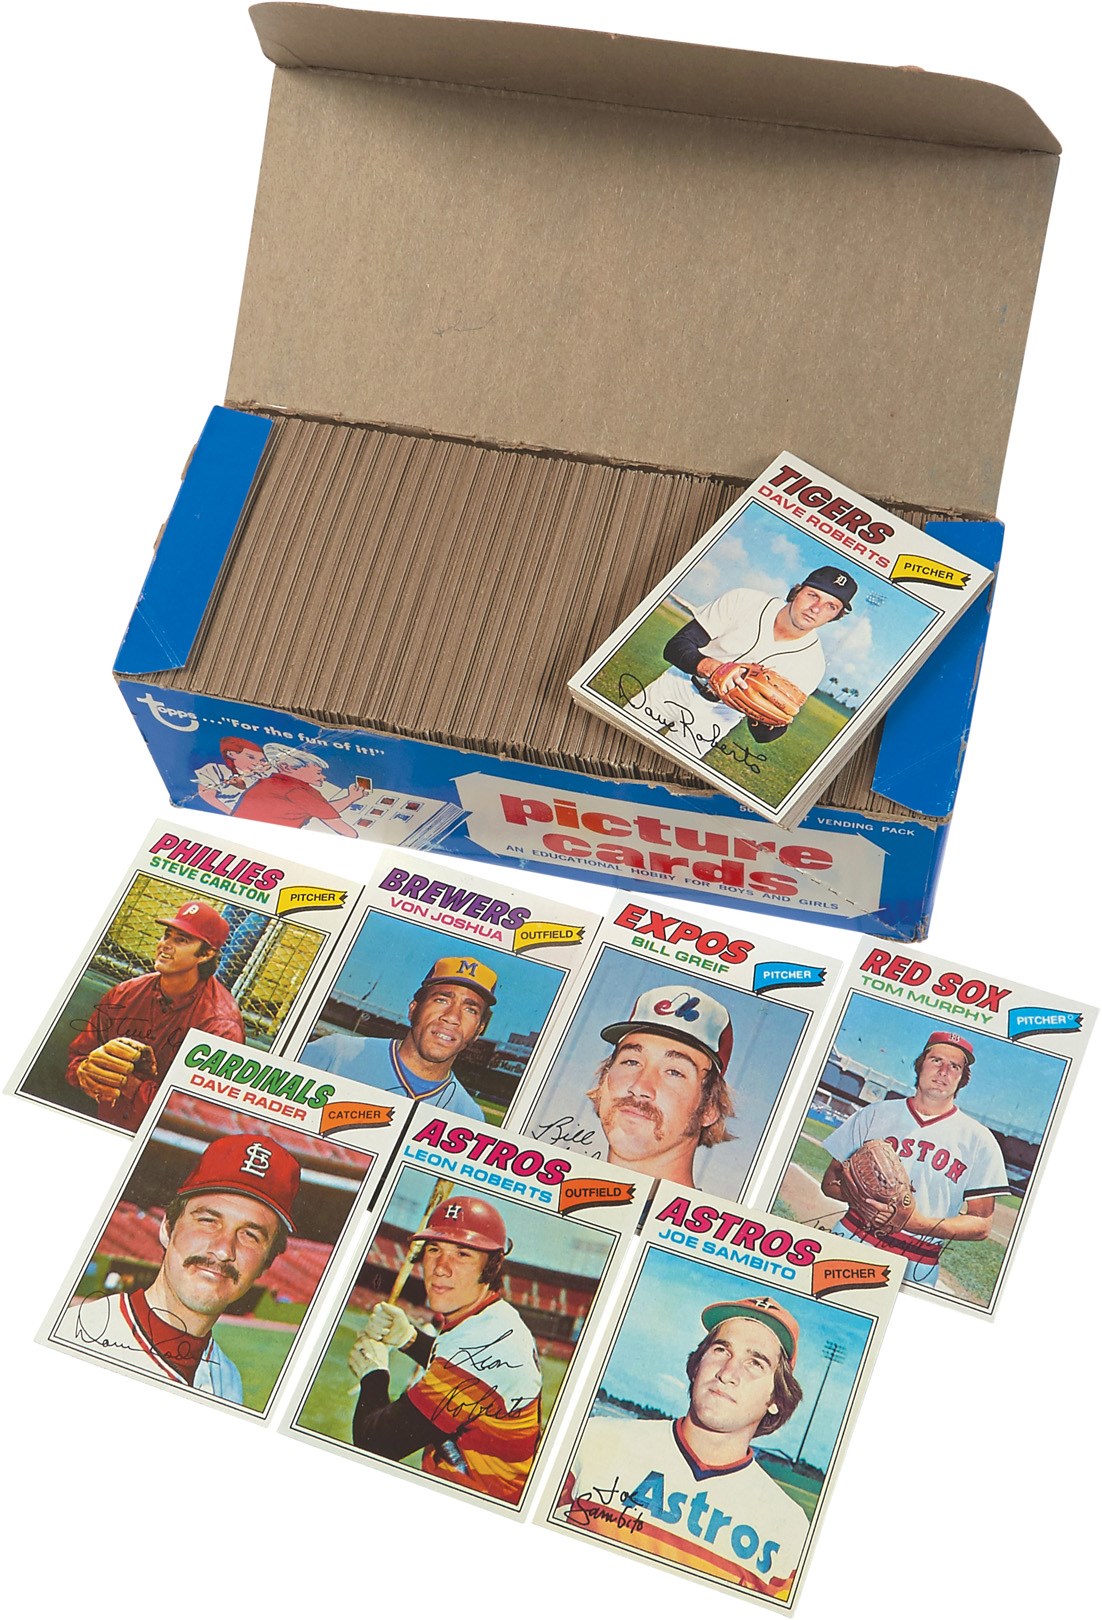 Baseball and Trading Cards - 1977 Topps Baseball Vending Box